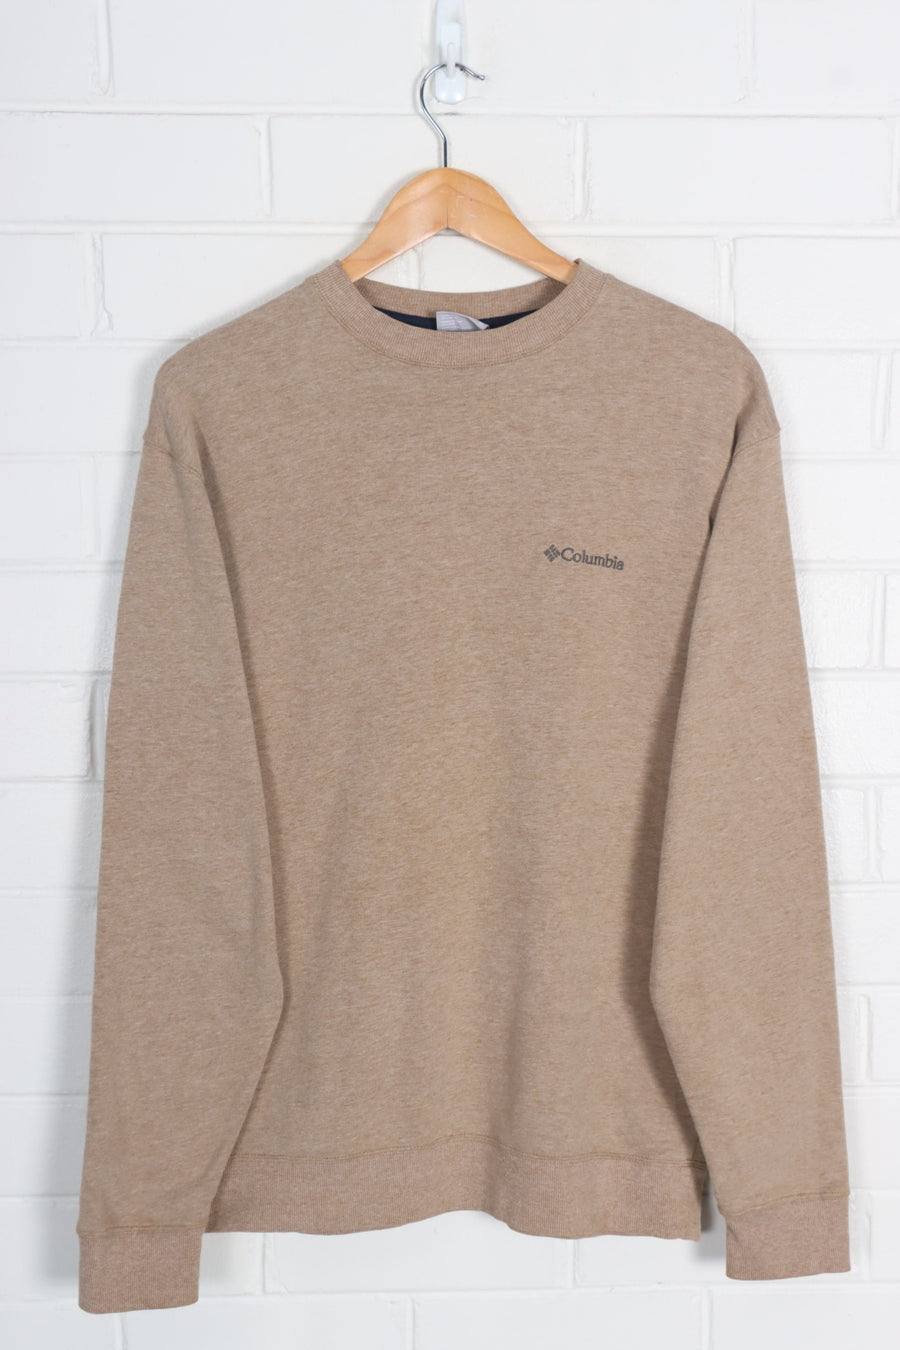 COLUMBIA Brown & Grey Embroidered Sweatshirt (M-L)